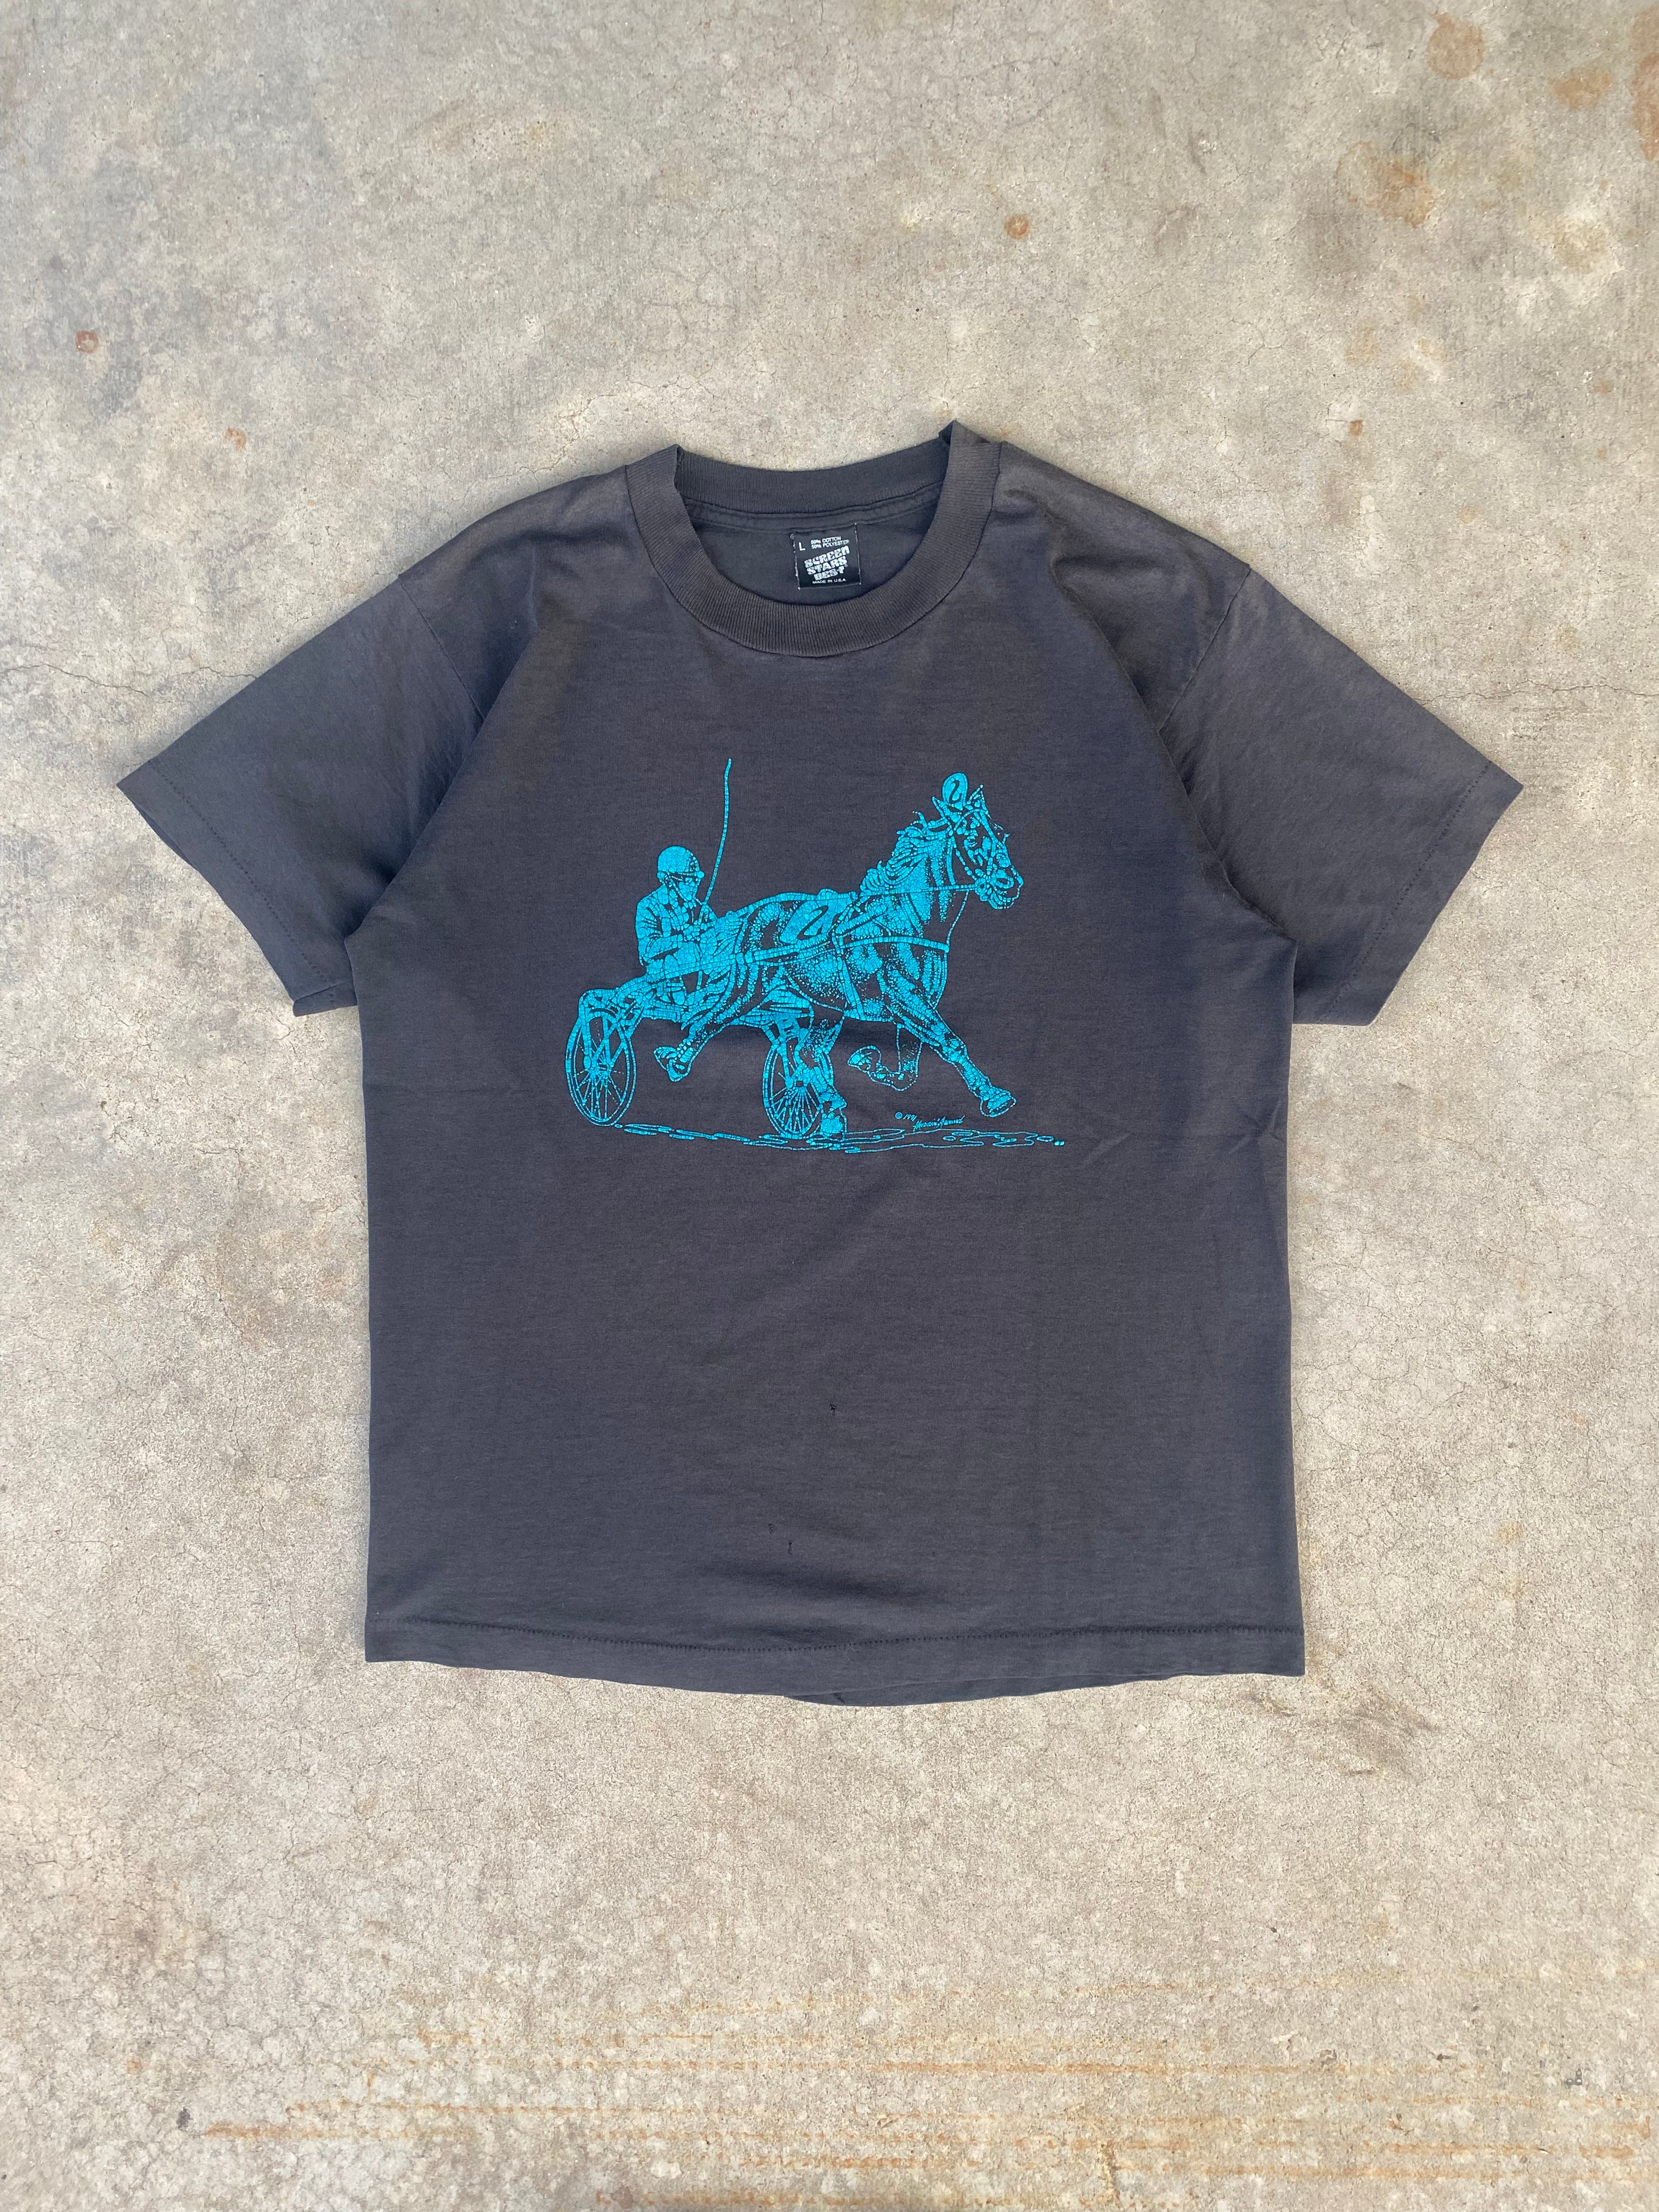 1991 Faded Horse and Jockey T-Shirt (M)